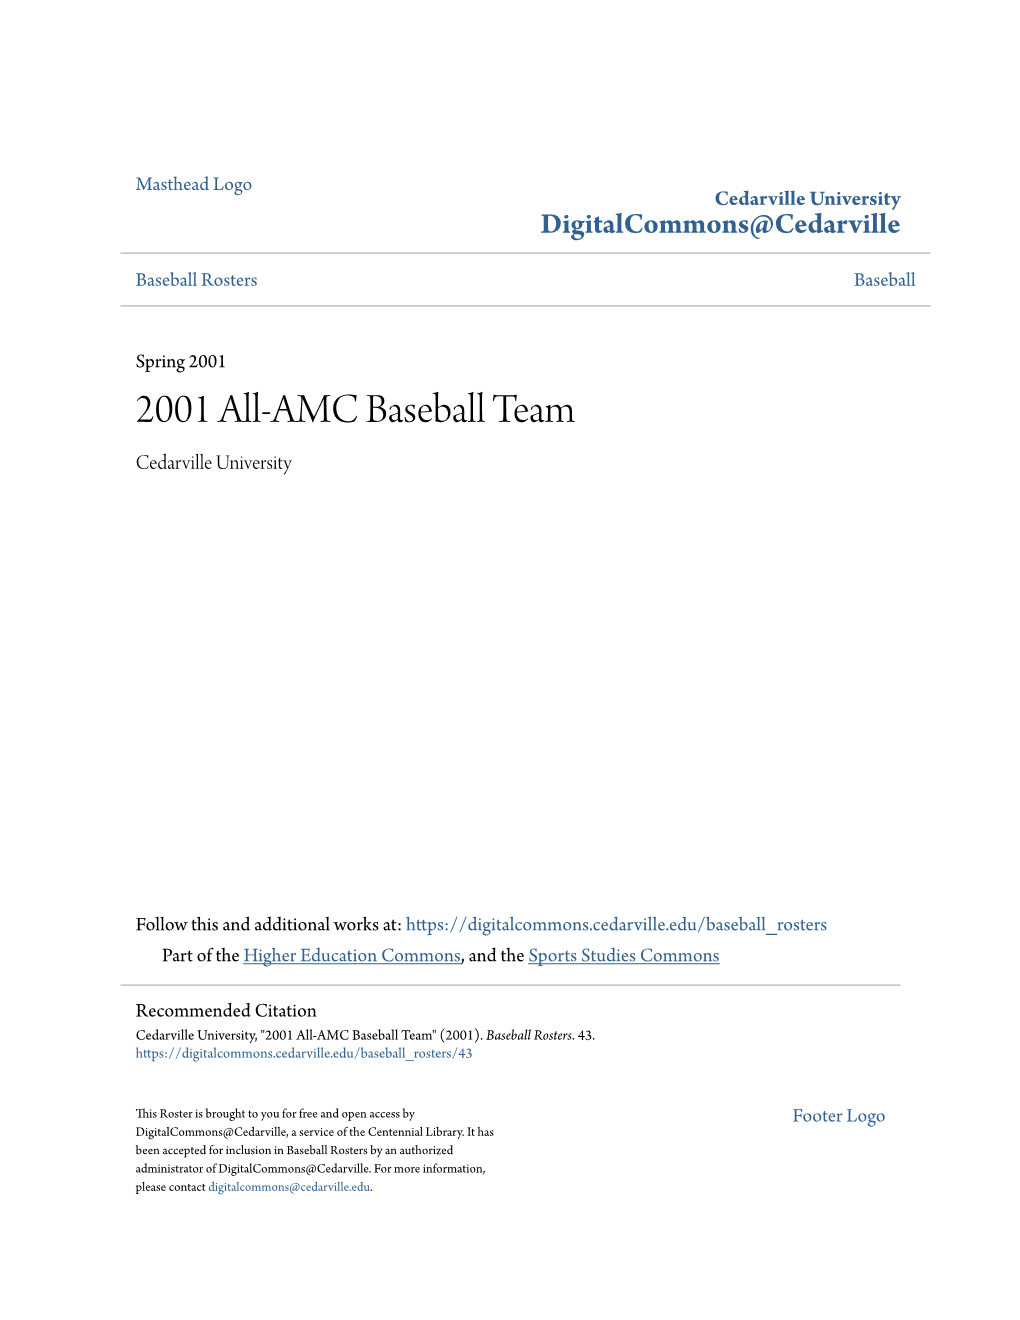 2001 All-AMC Baseball Team Cedarville University